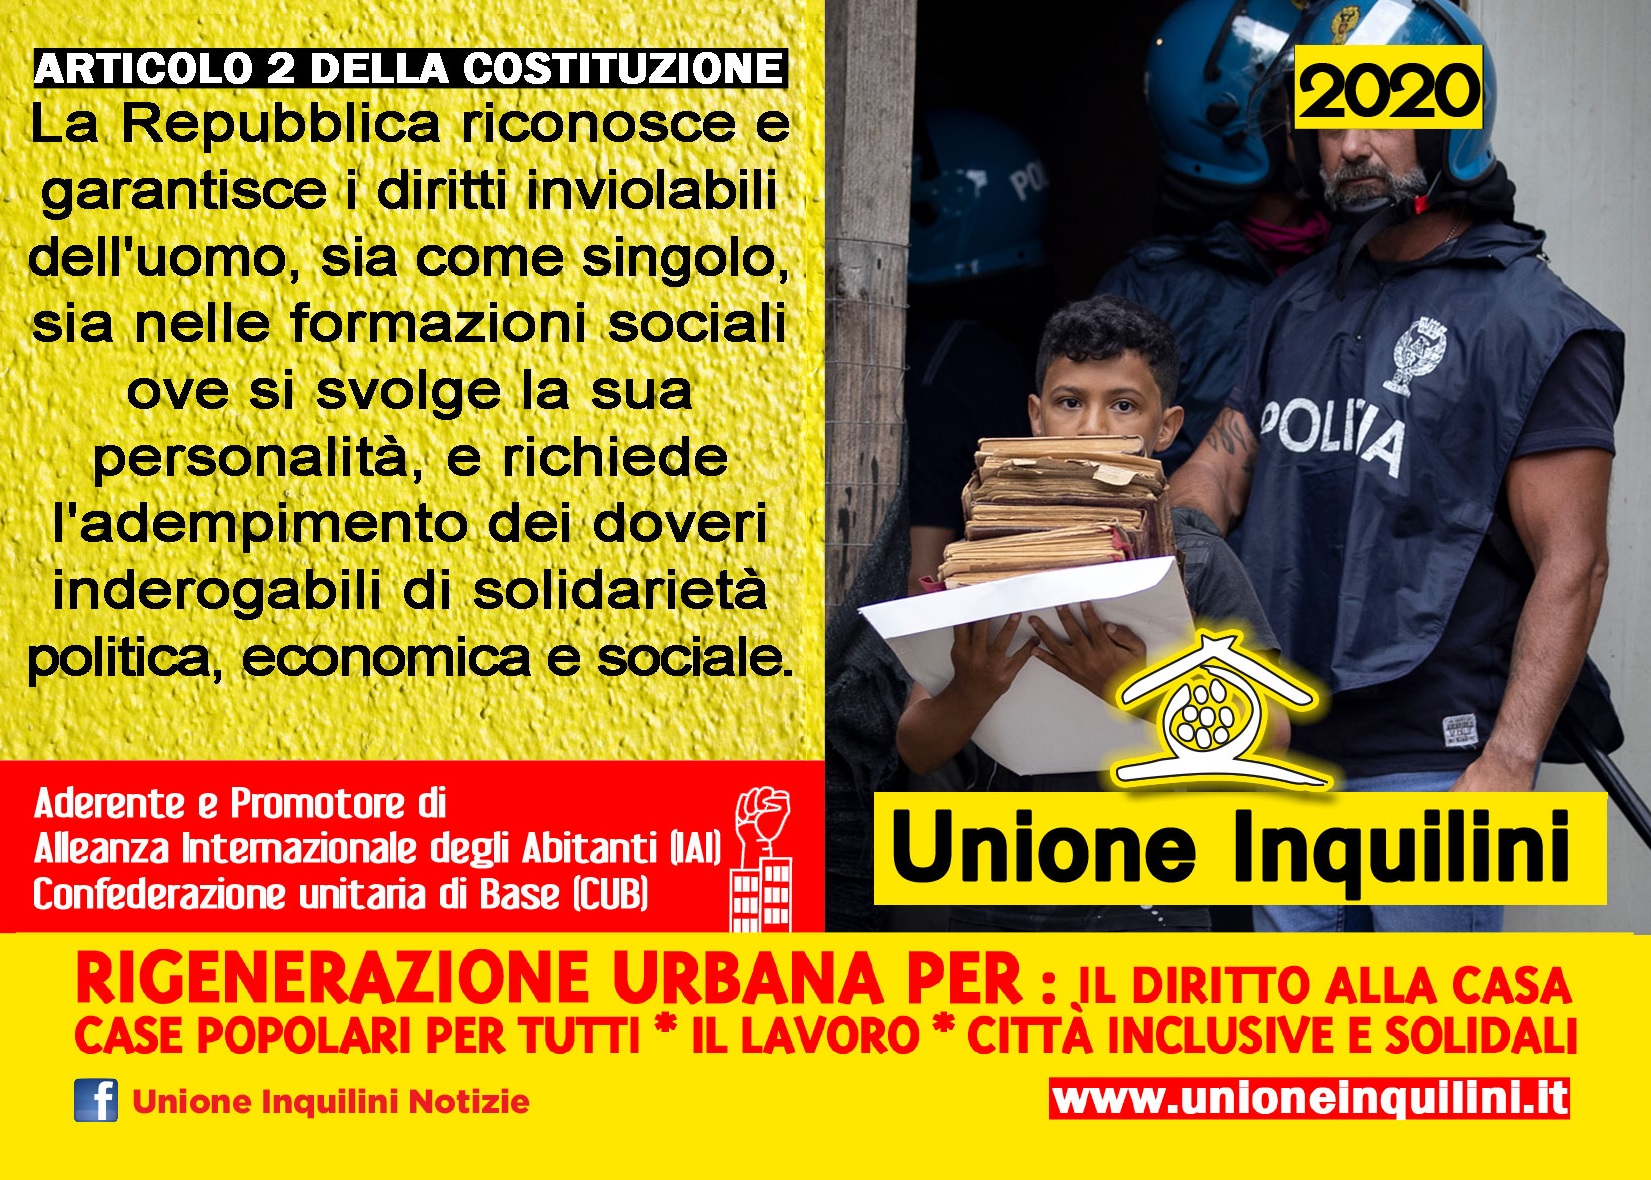 http://www.unioneinquilini.it/public/foto/T2020.jpg